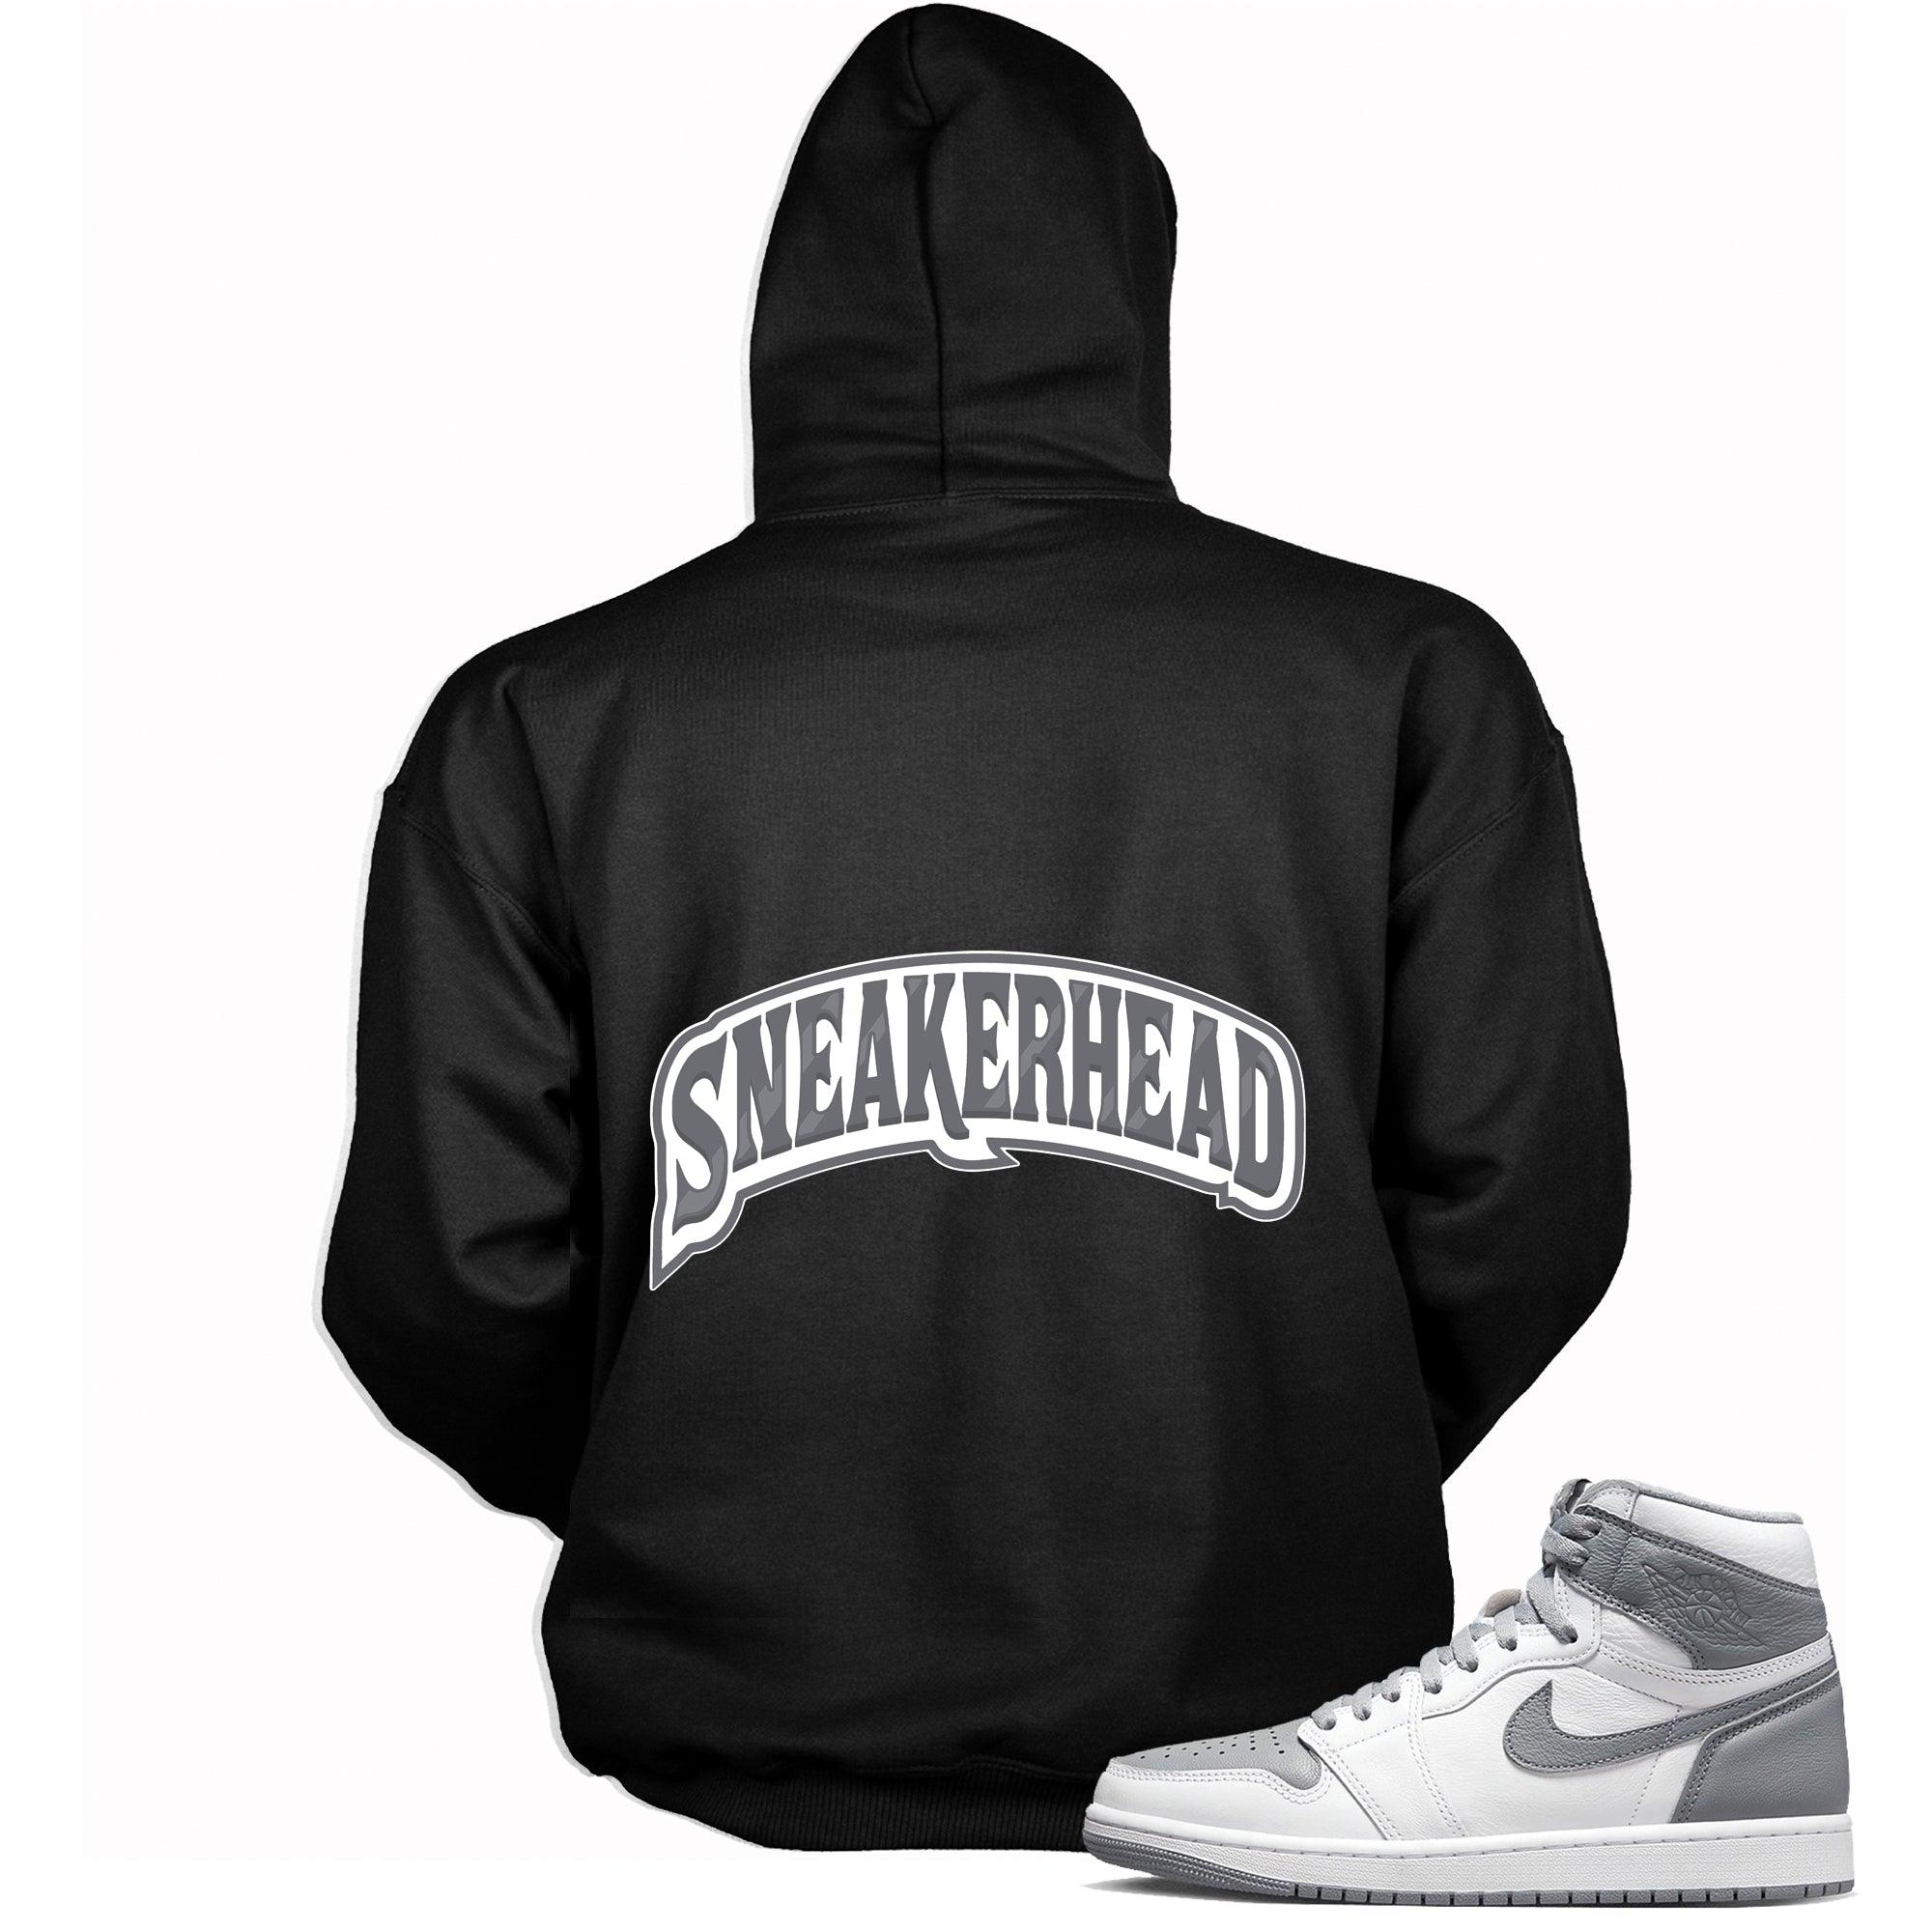 Sneakerhead Hooded Sweatshirt for Jordan 1s photo